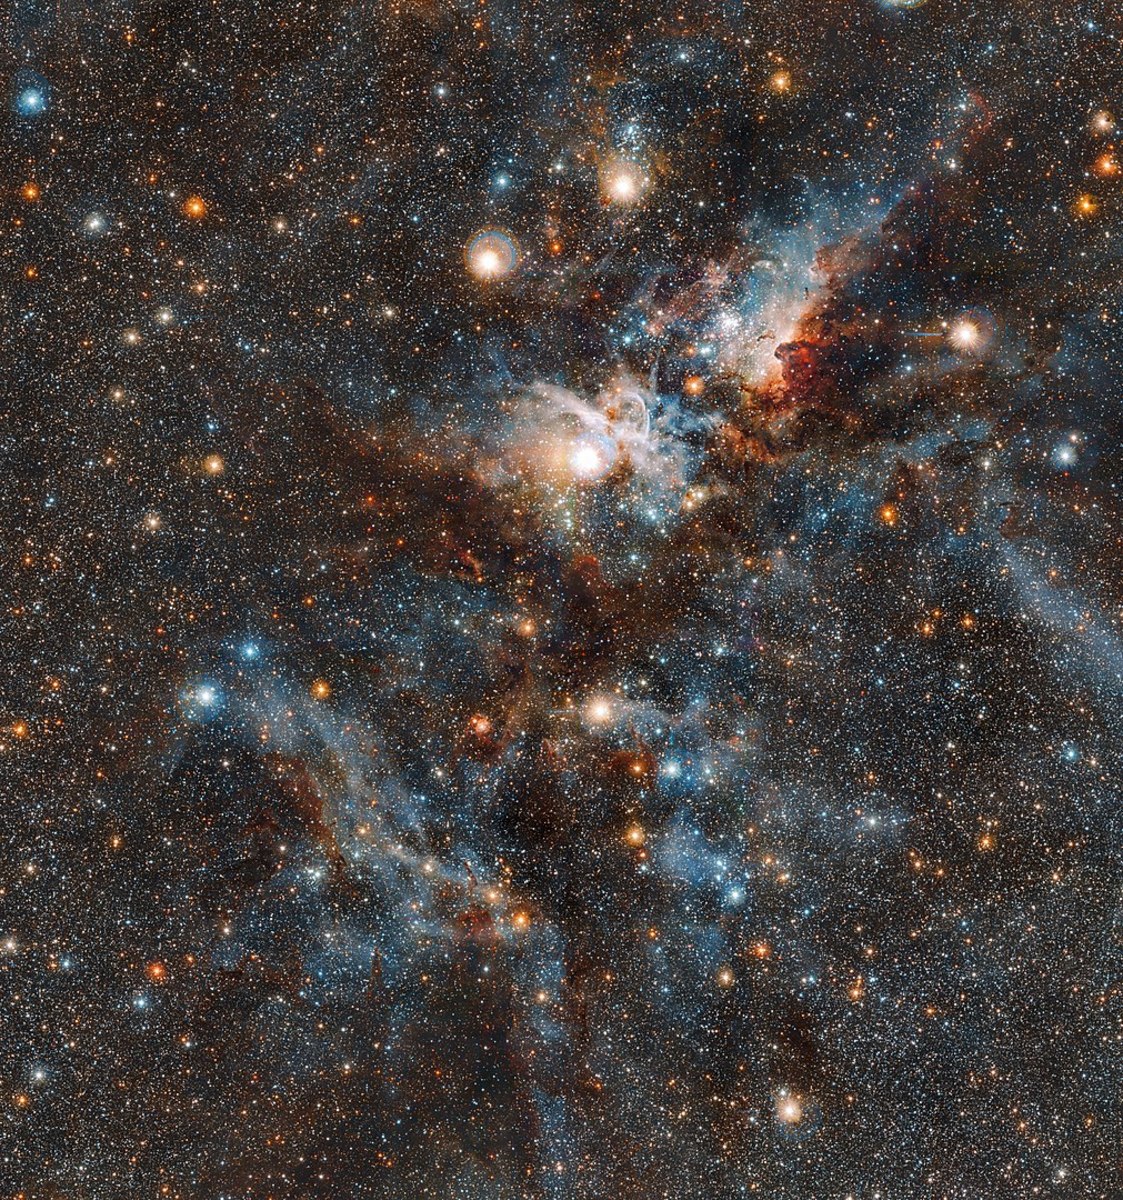 An infrared image of the Carina Nebula.